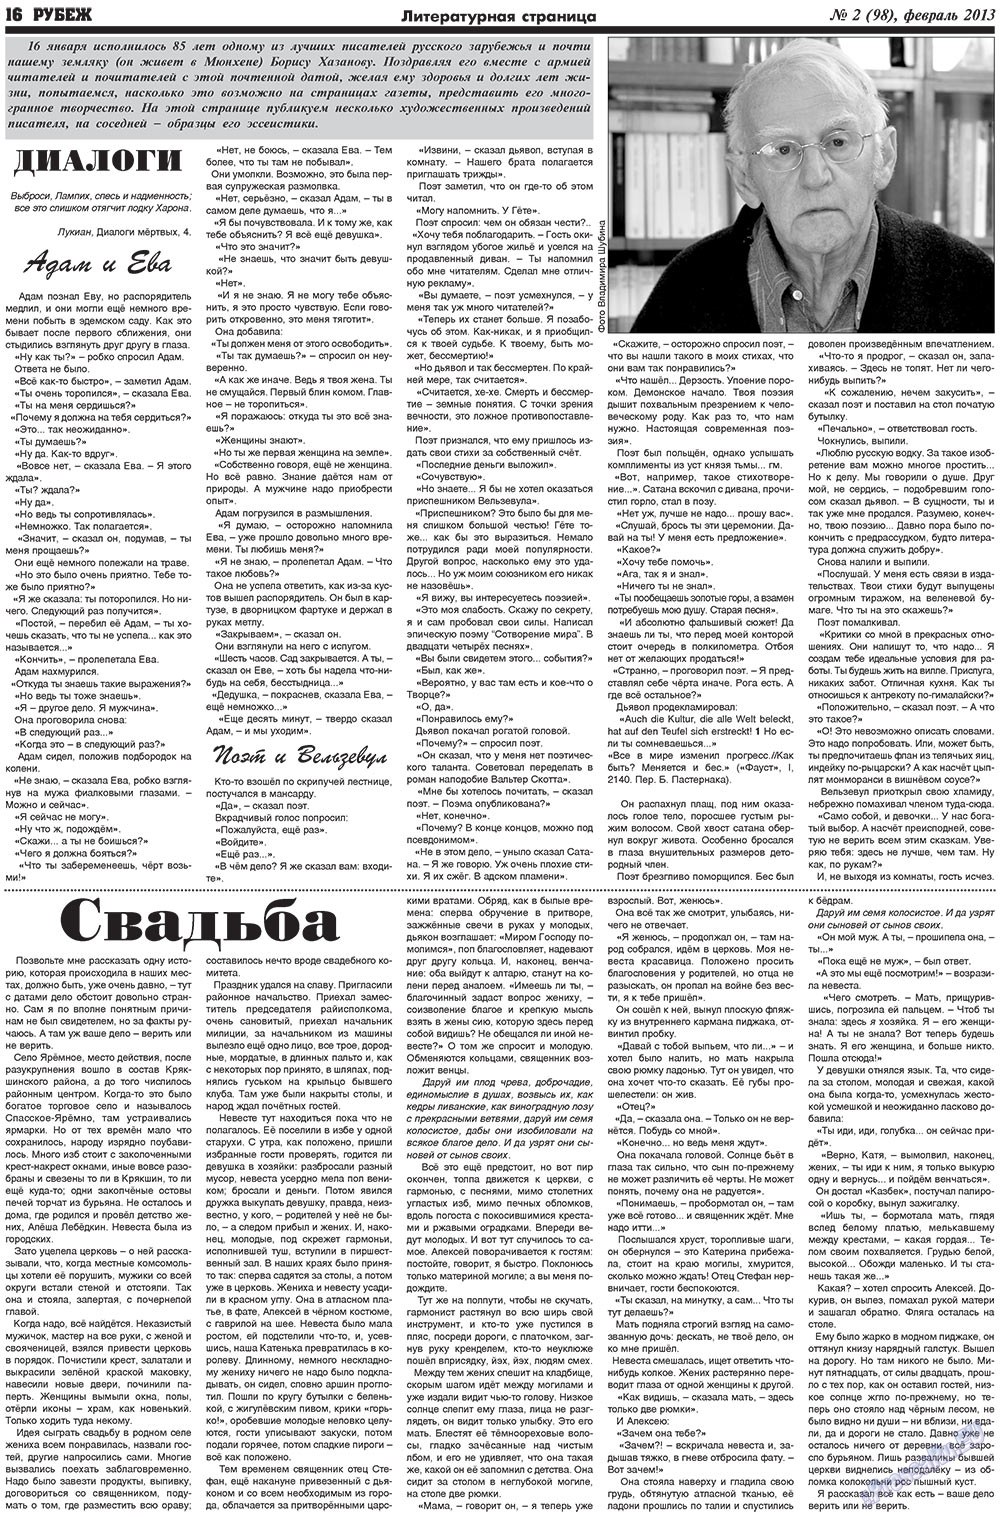 Рубеж, газета. 2013 №2 стр.16